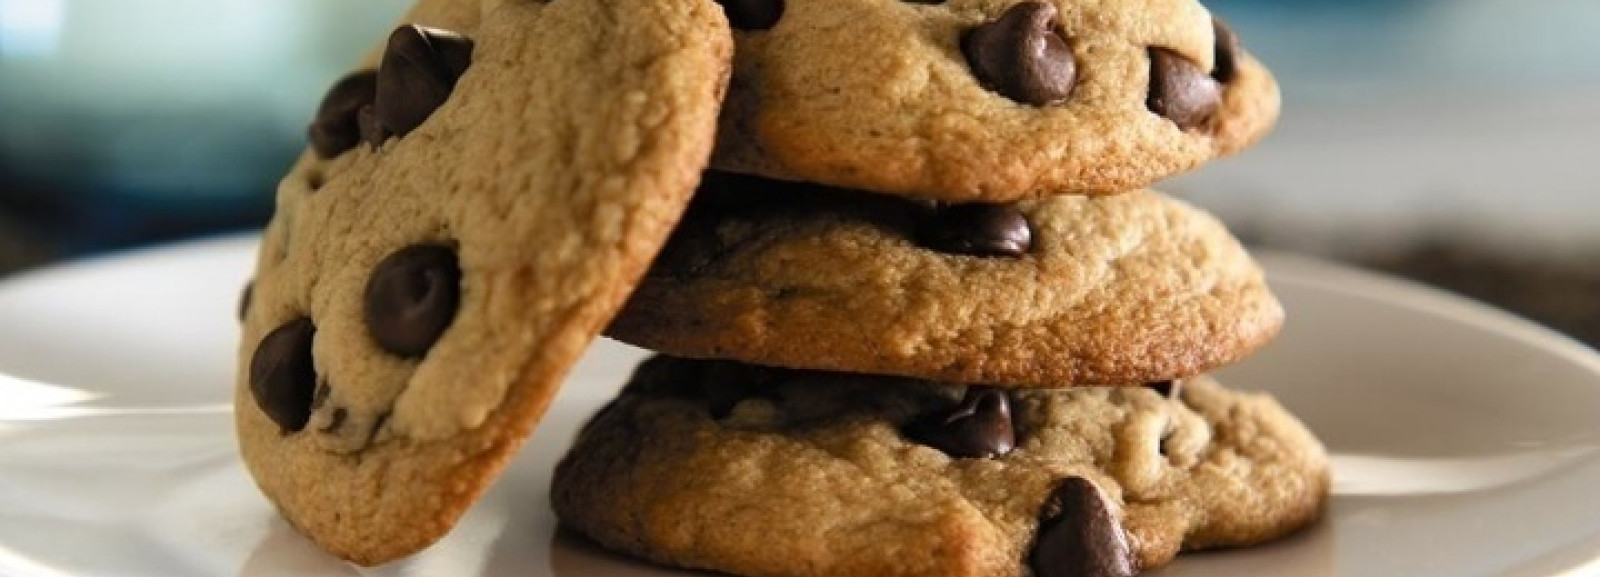 Diabetic Chocolate Chip Cookies With Splenda
 Chocolate Chip Cookie Recipe